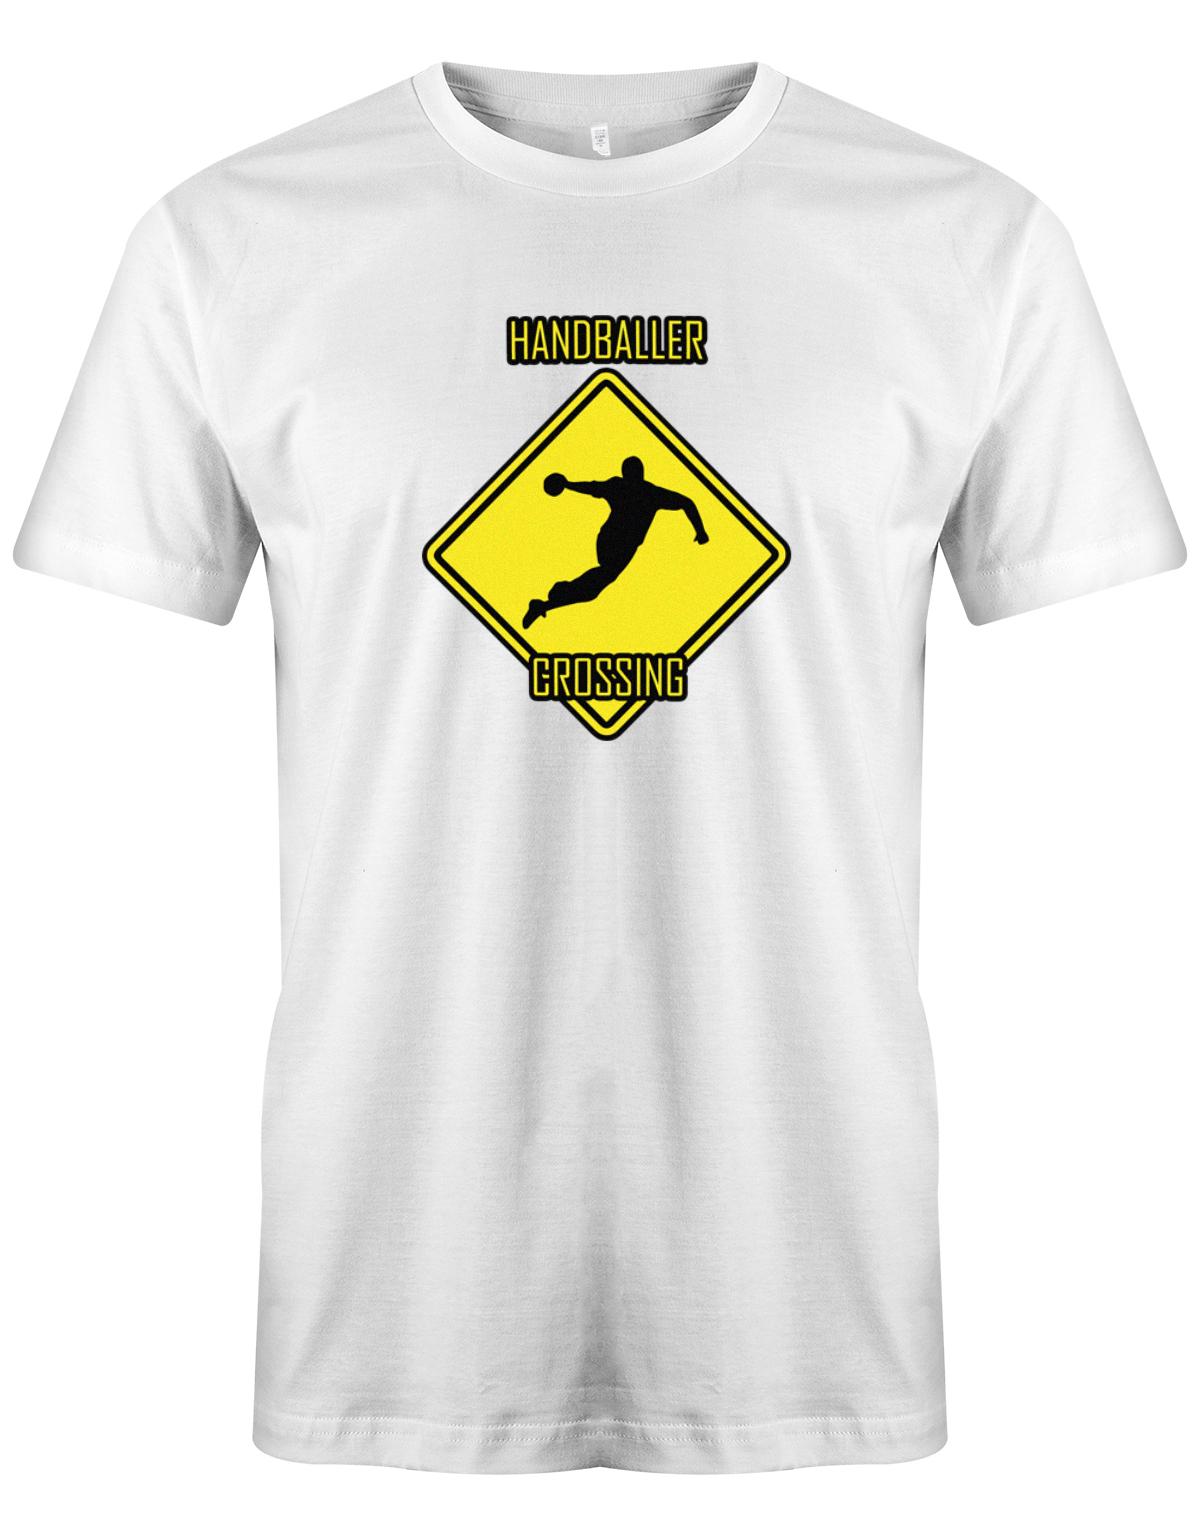 HAndballer-Crossing-Handball-Shirt-Herren-Weiss